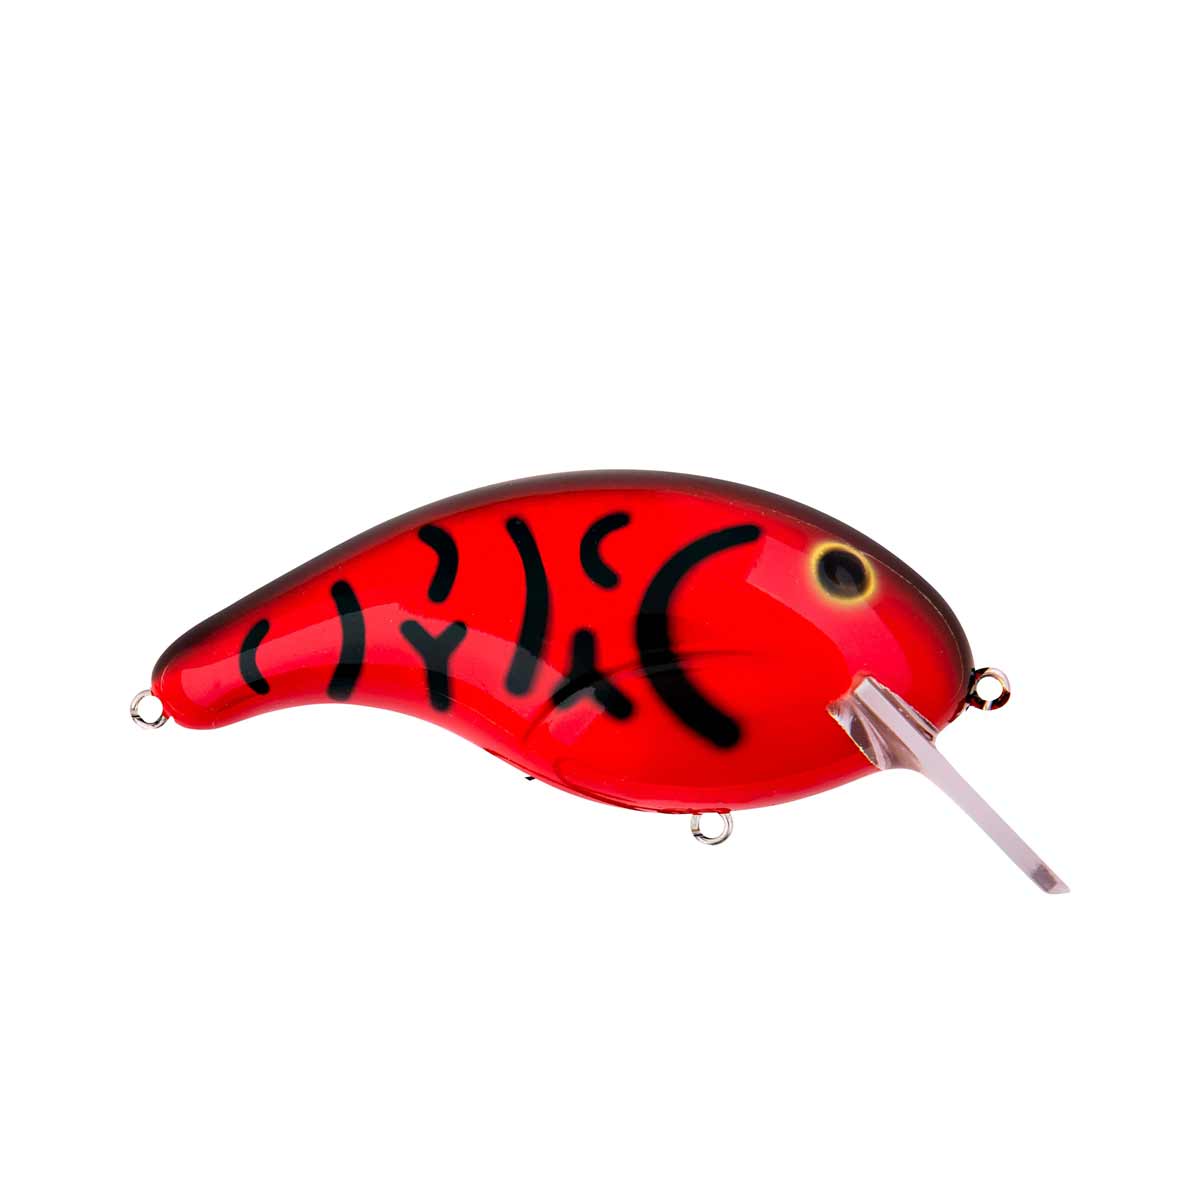 Rackit_Red Crawfish